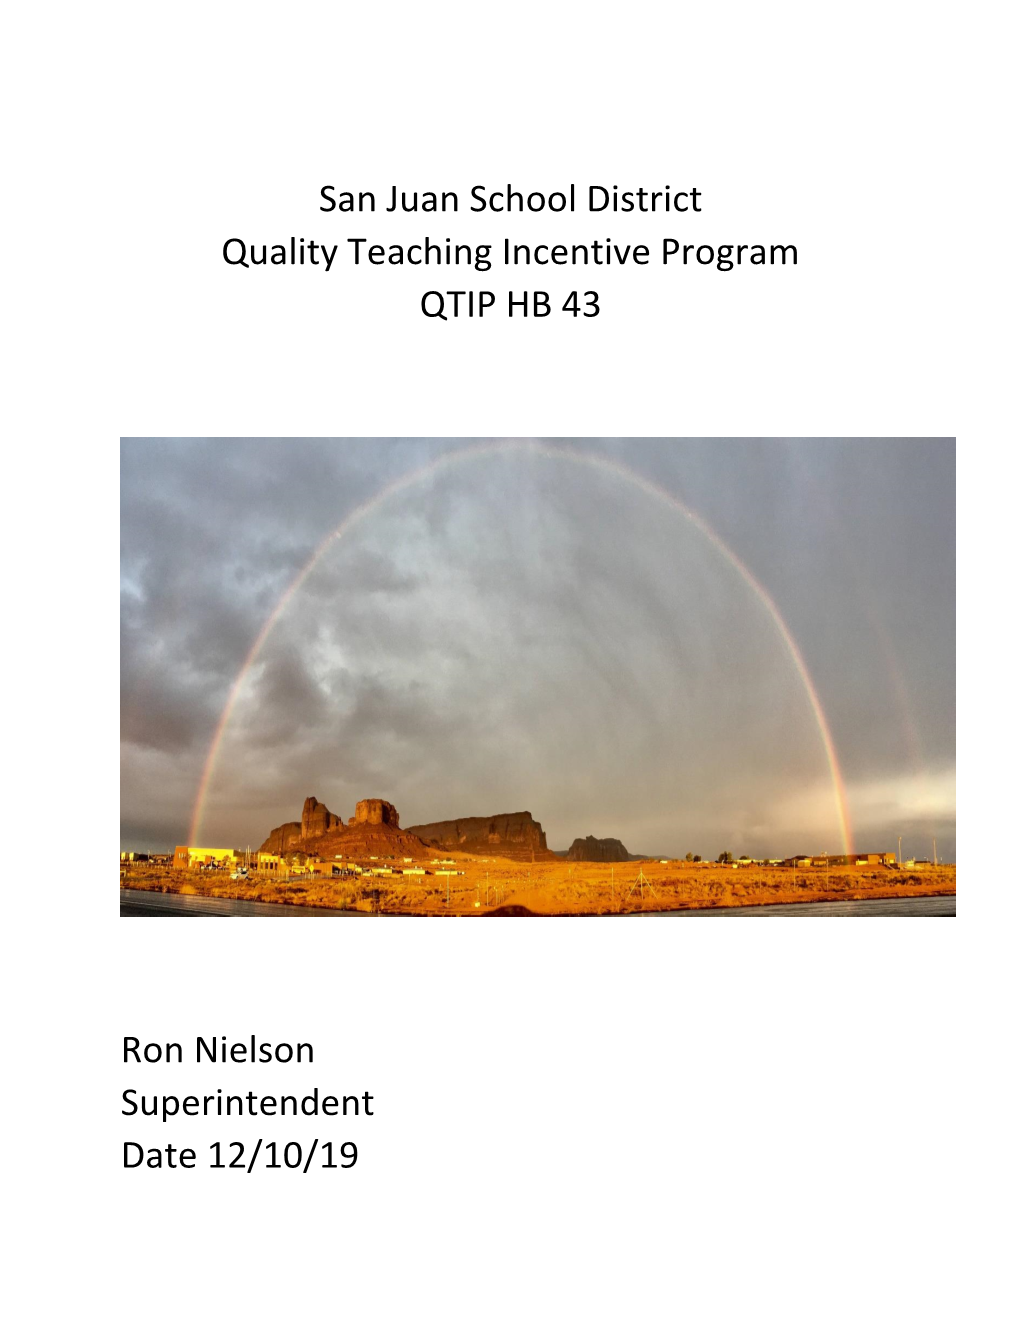 San Juan School District Quality Teaching Incentive Program QTIP HB 43